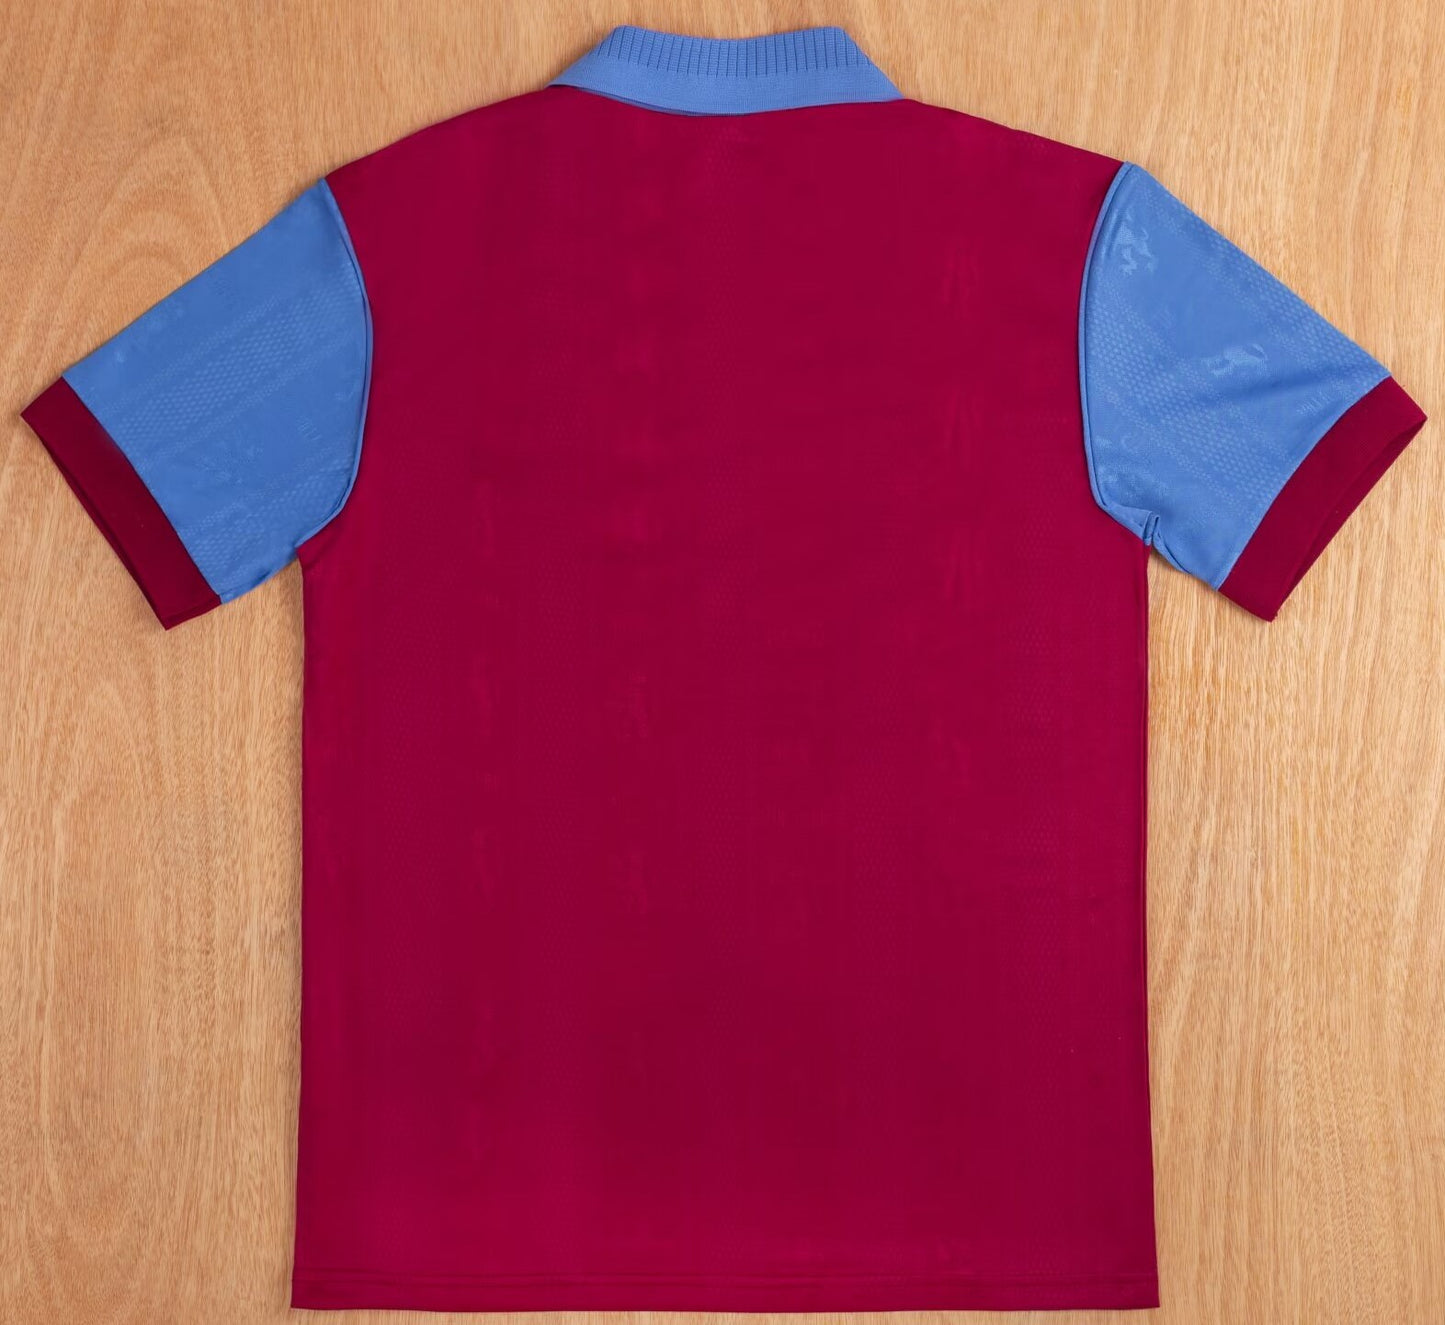 Aston Villa 95-97 Home Shirt